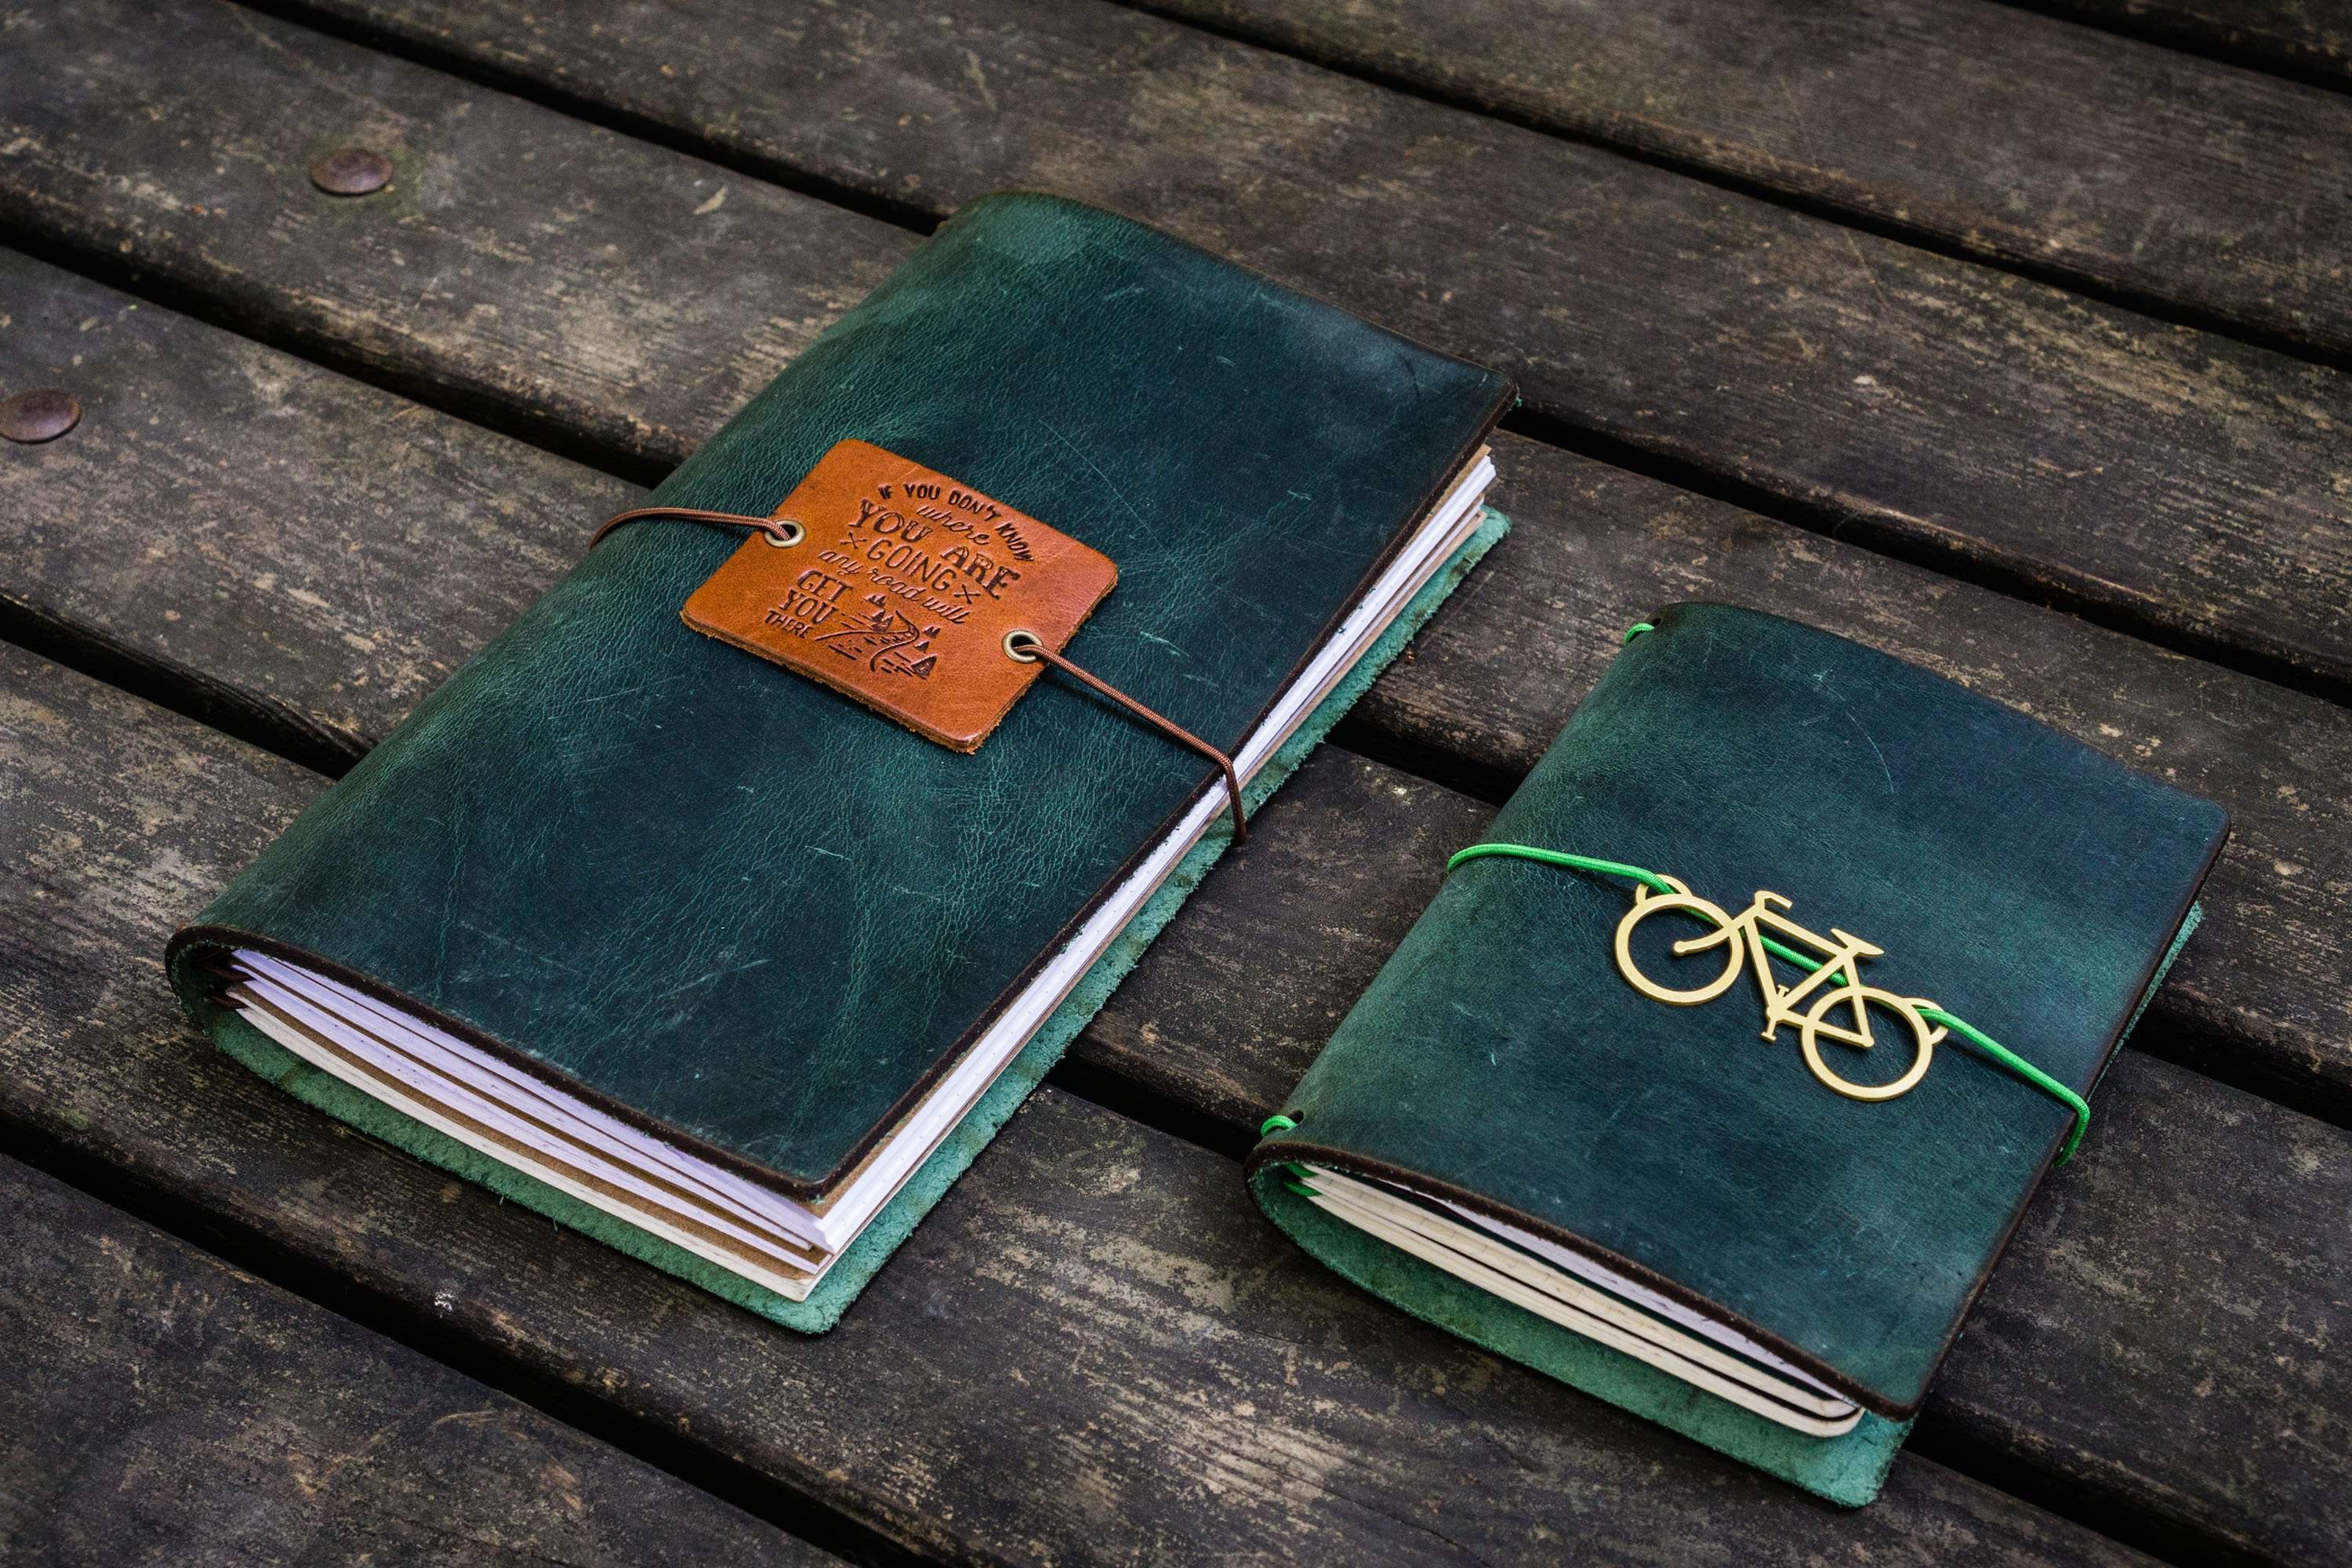 We provide Traveler's Company Traveler's Notebook Accessories 017